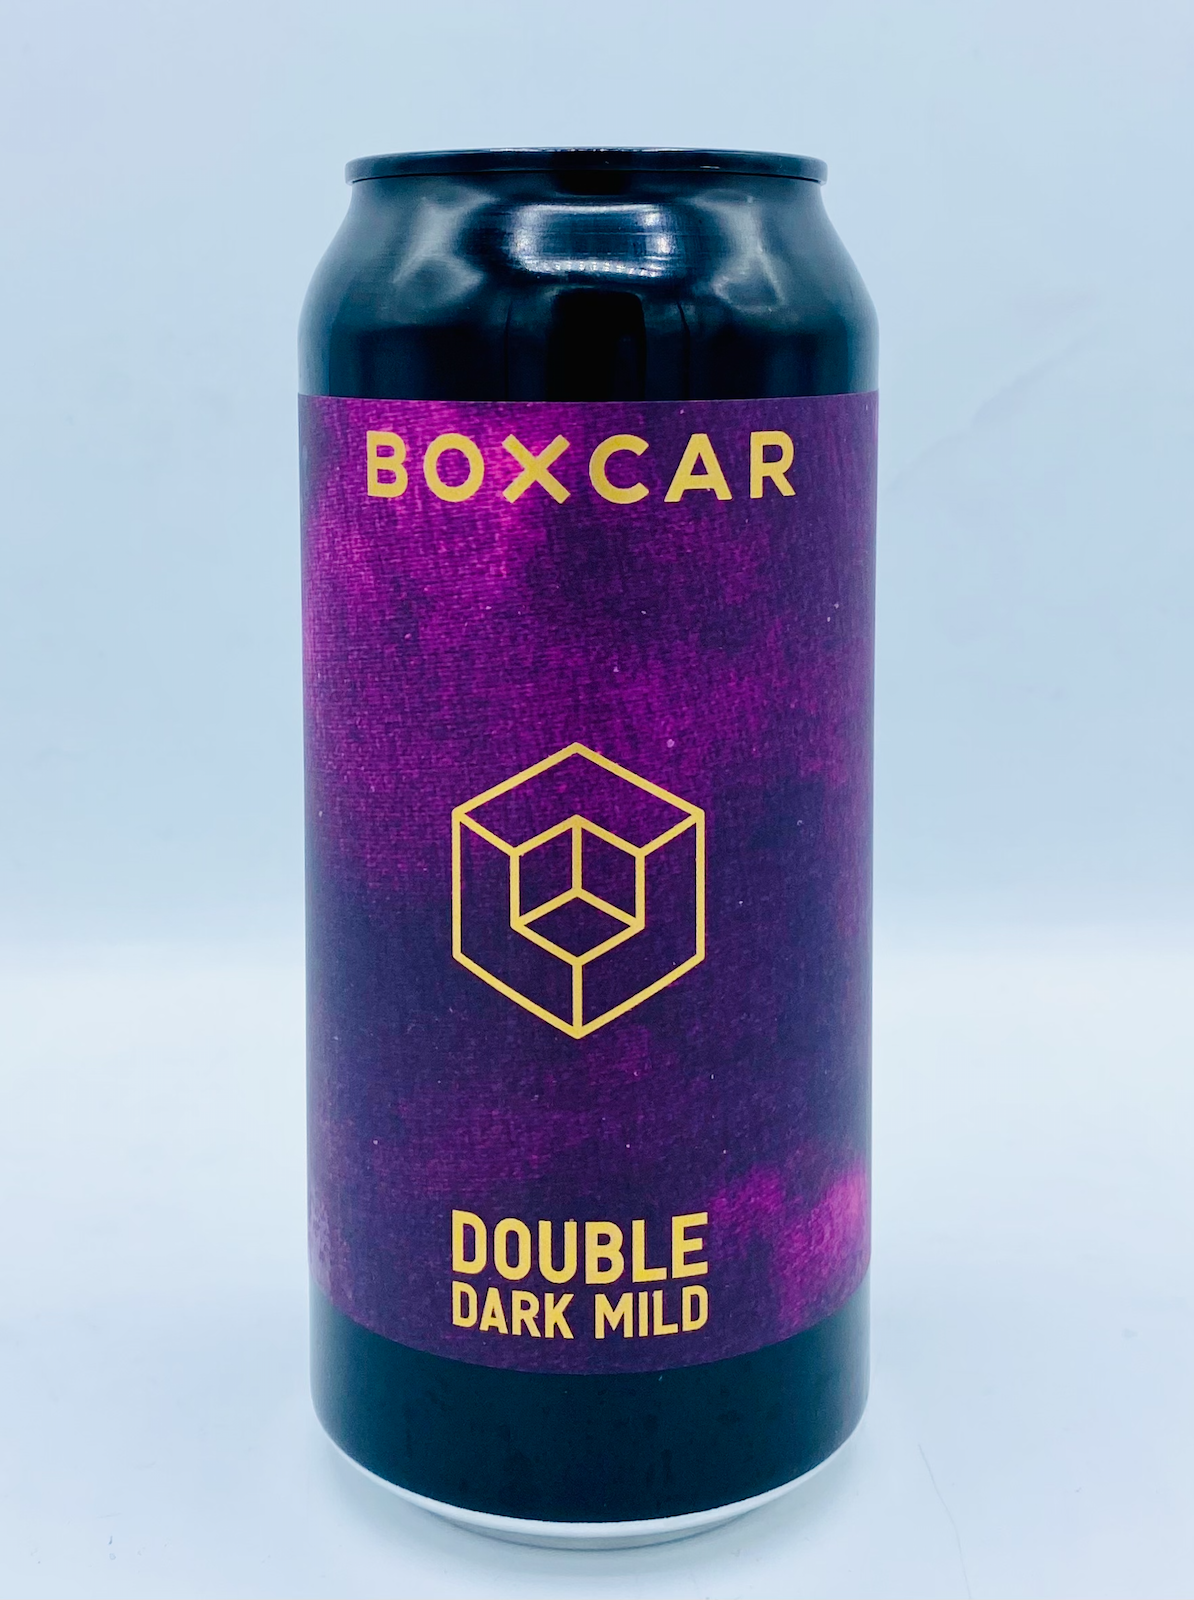 BOXCAR Brewery - Double Dark Mild 6.3%